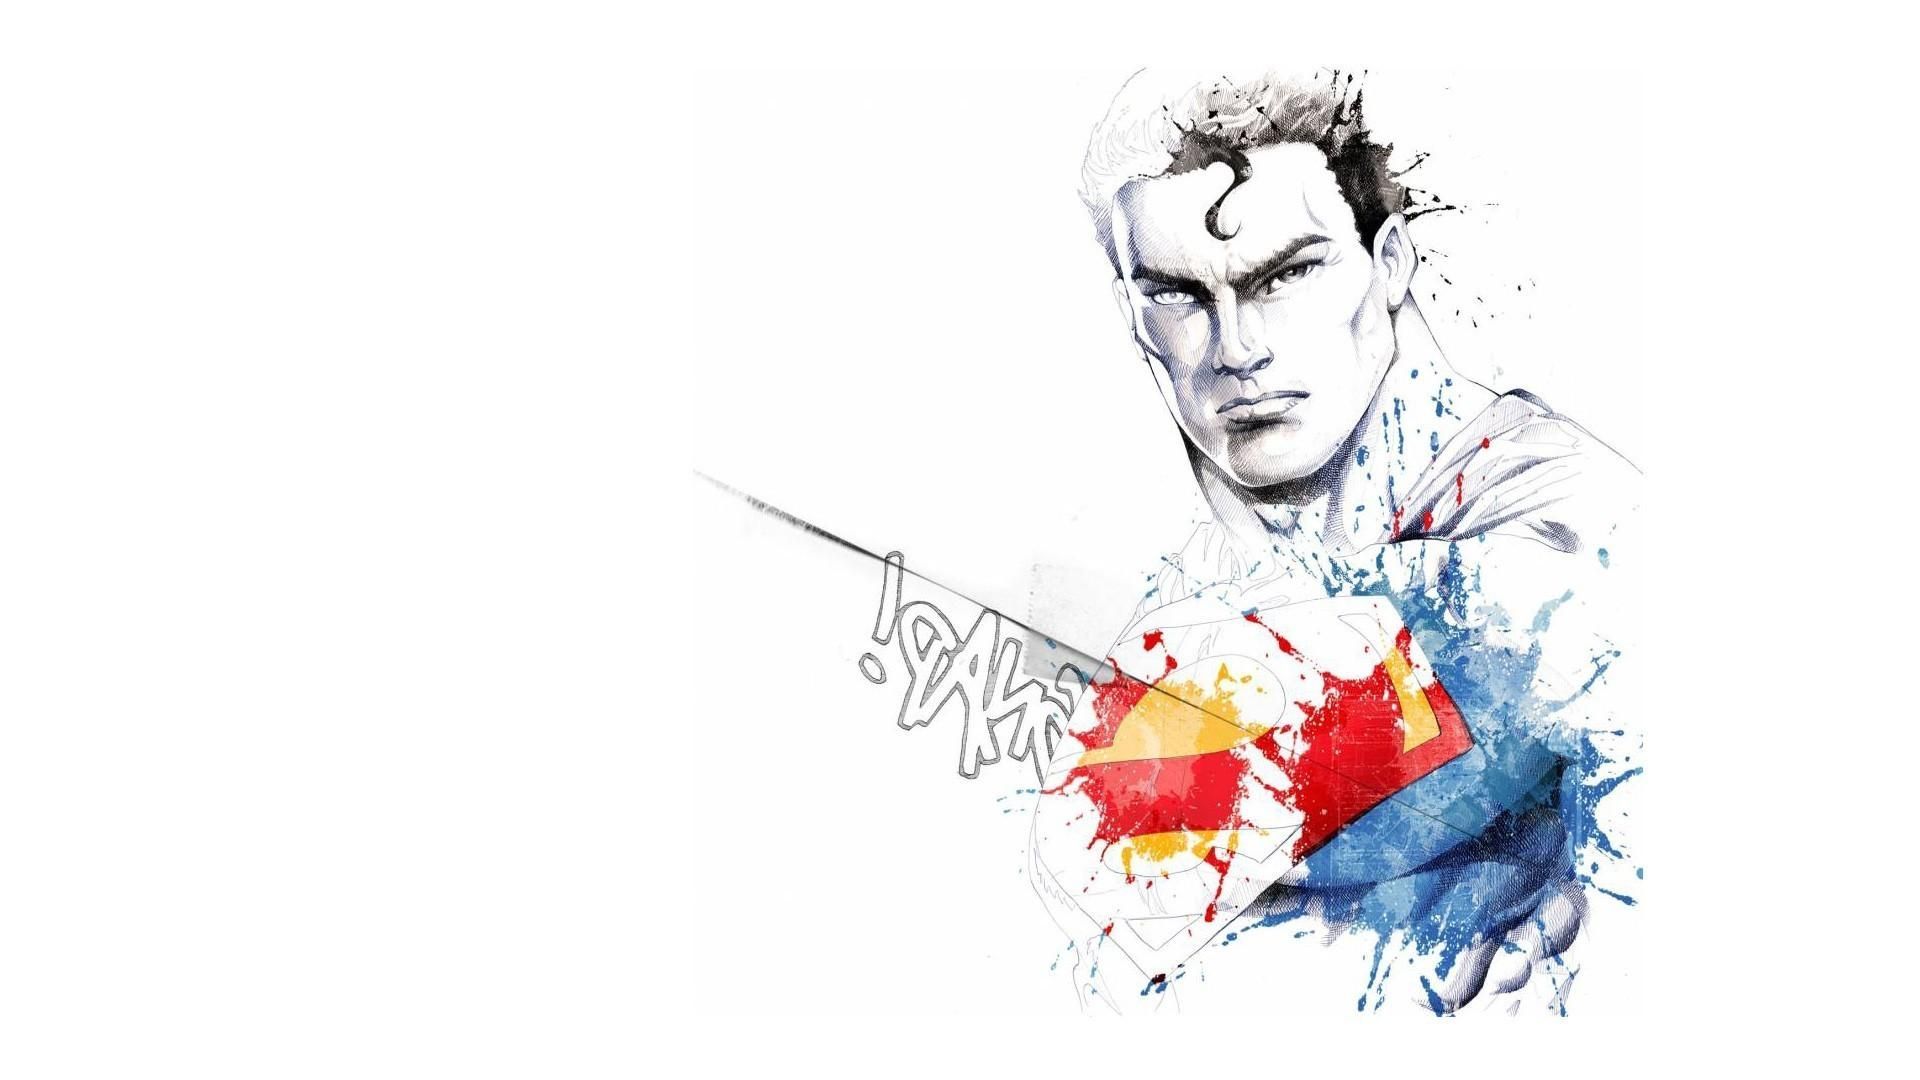 Superman HD Wallpapers | Superman Desktop Images | Cool Wallpapers